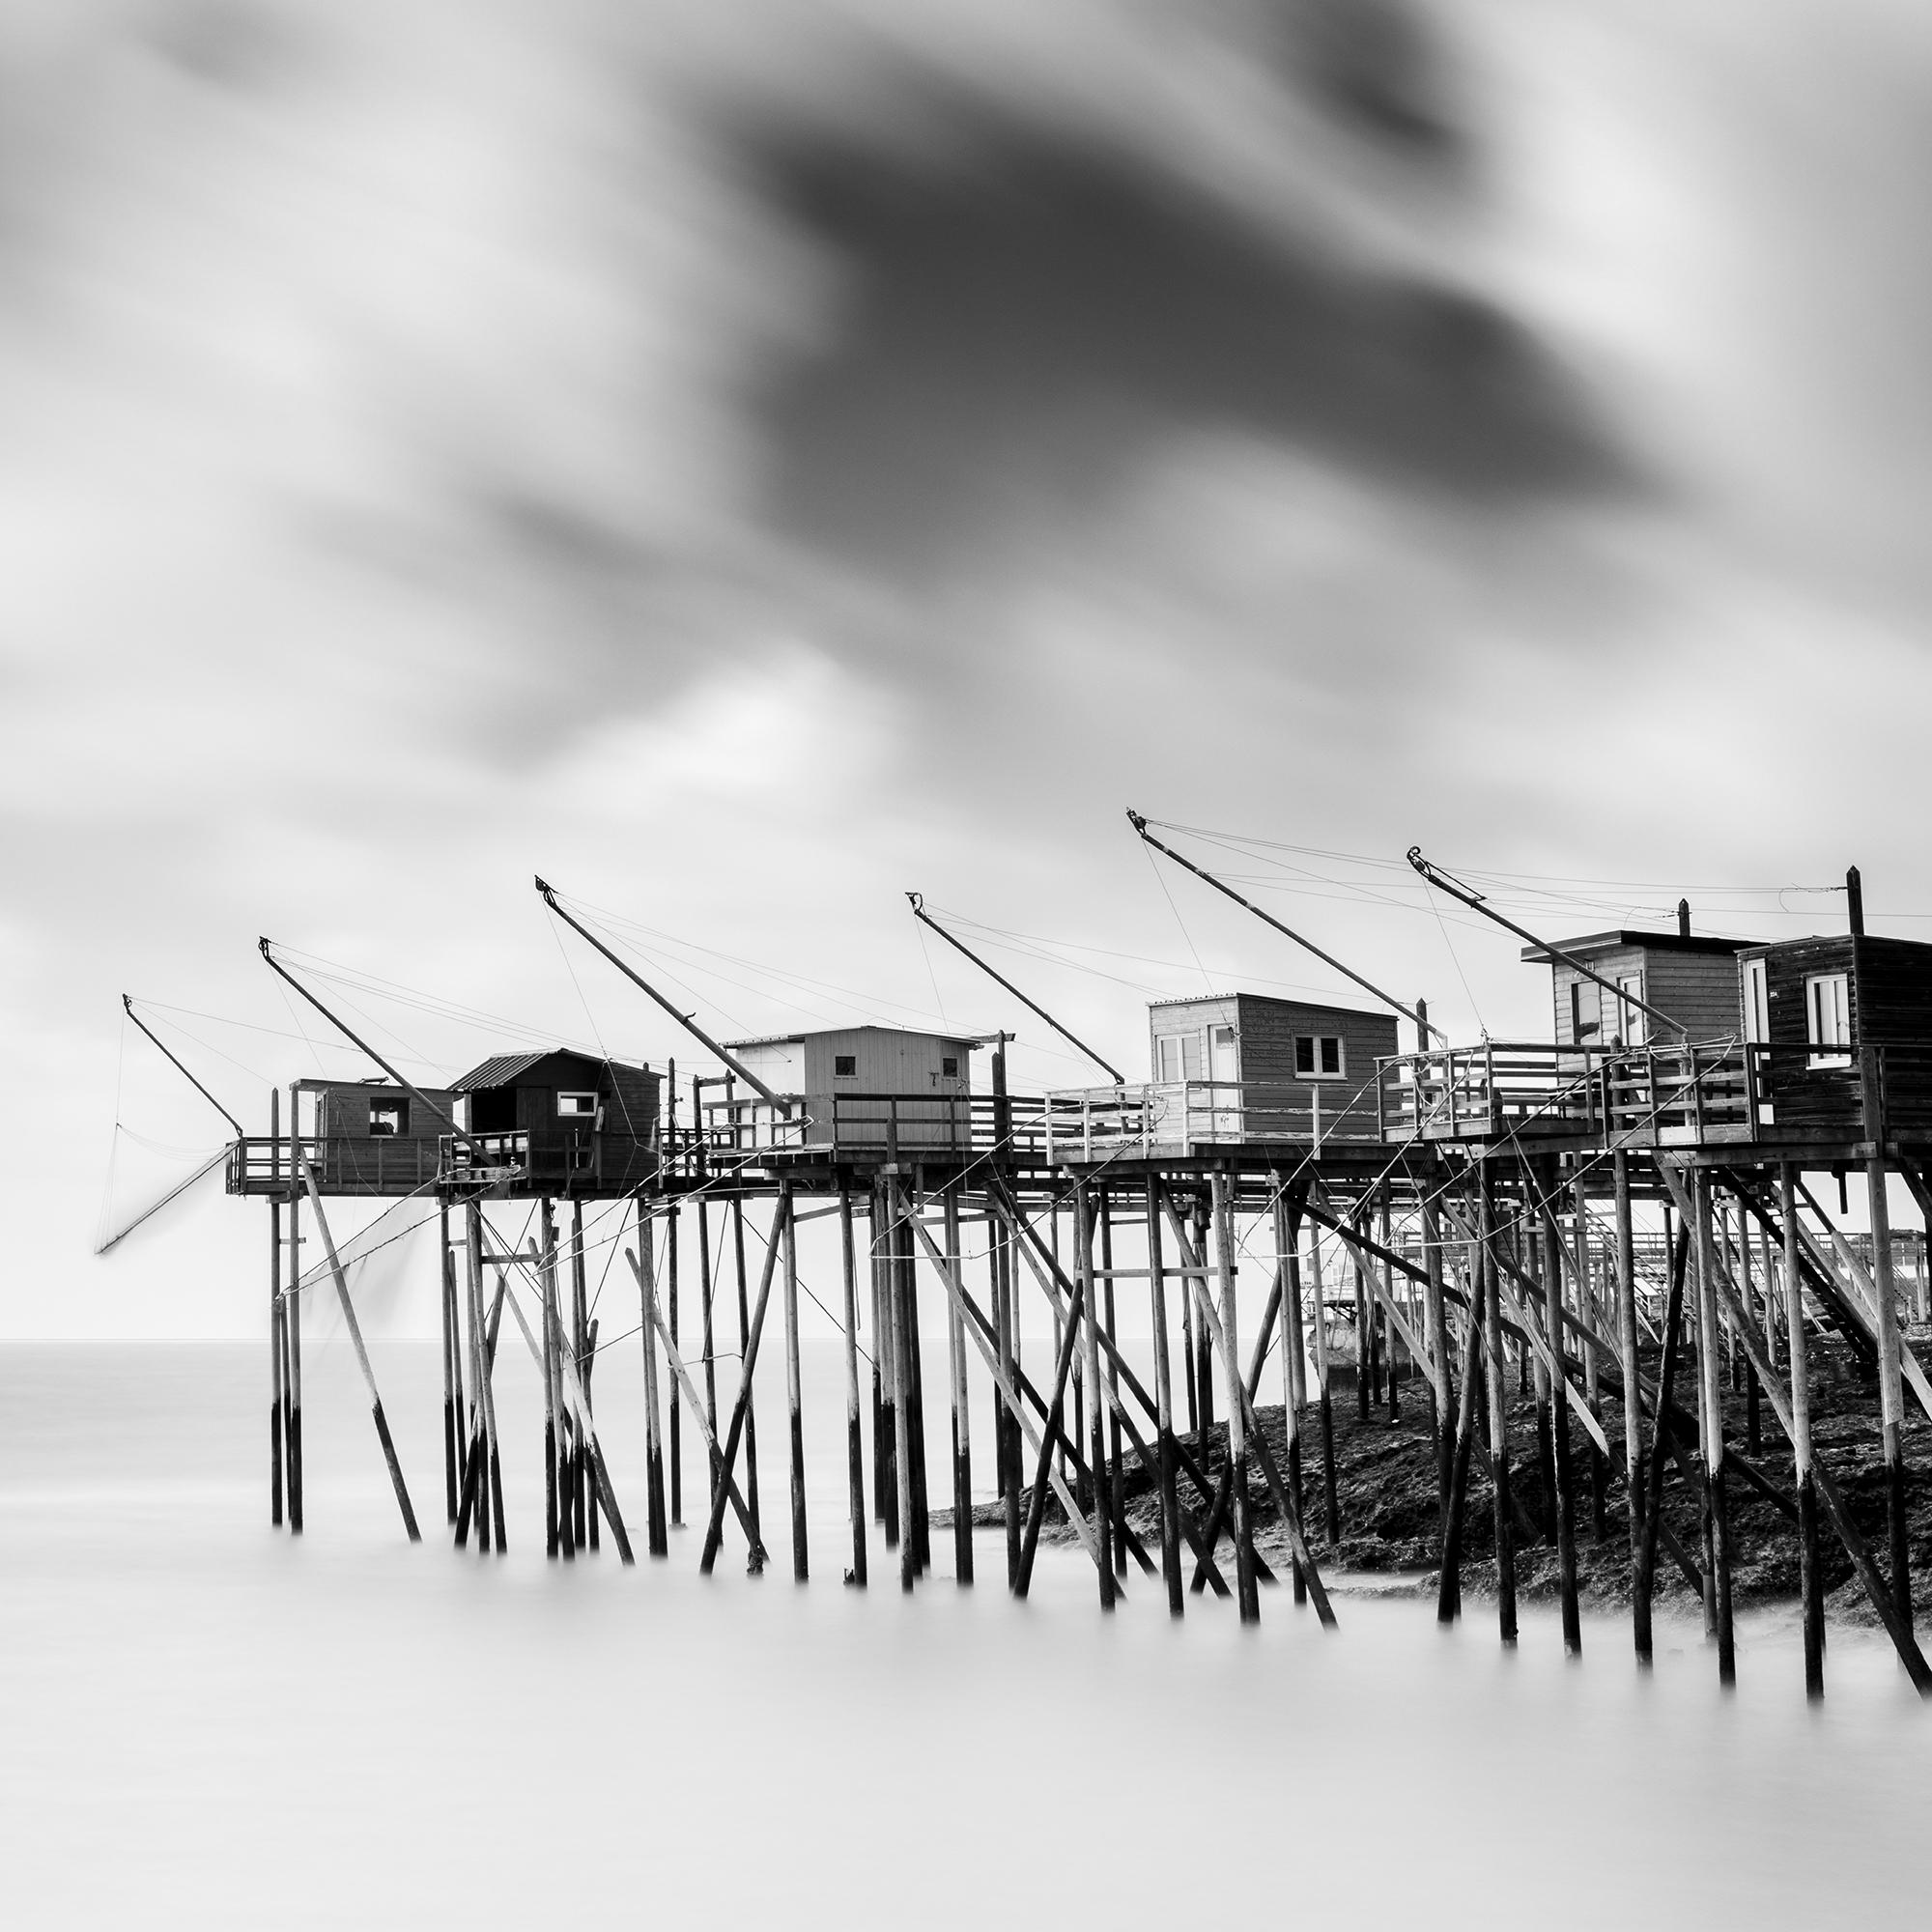 Fishing Hut on Stilts, Carrelet, Atlanic Coast, b&w art landscape photography For Sale 4